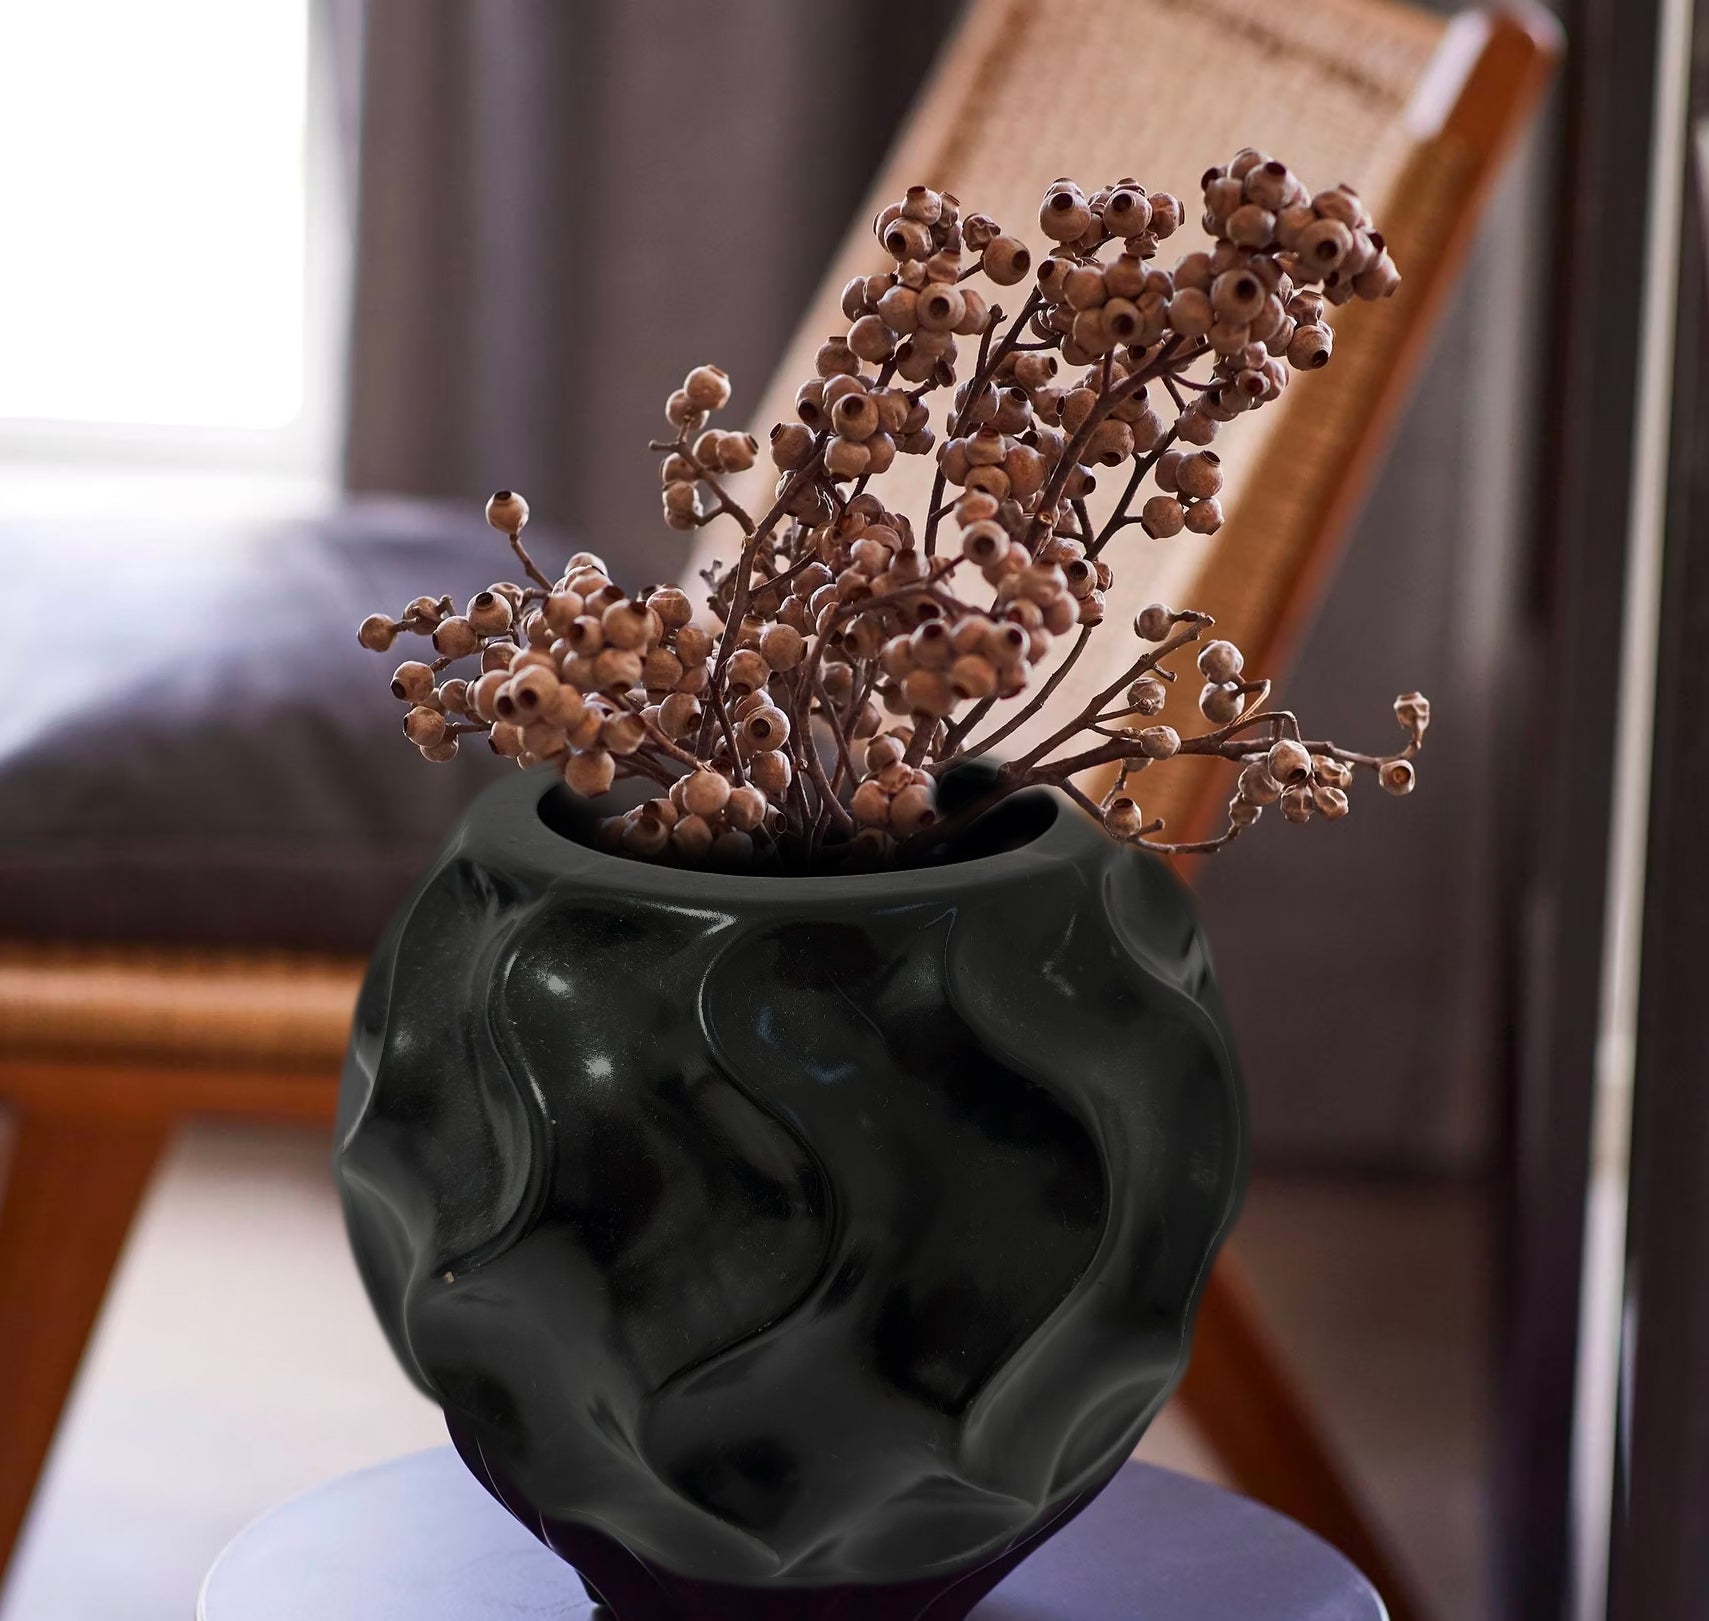 Deco Vase, Black